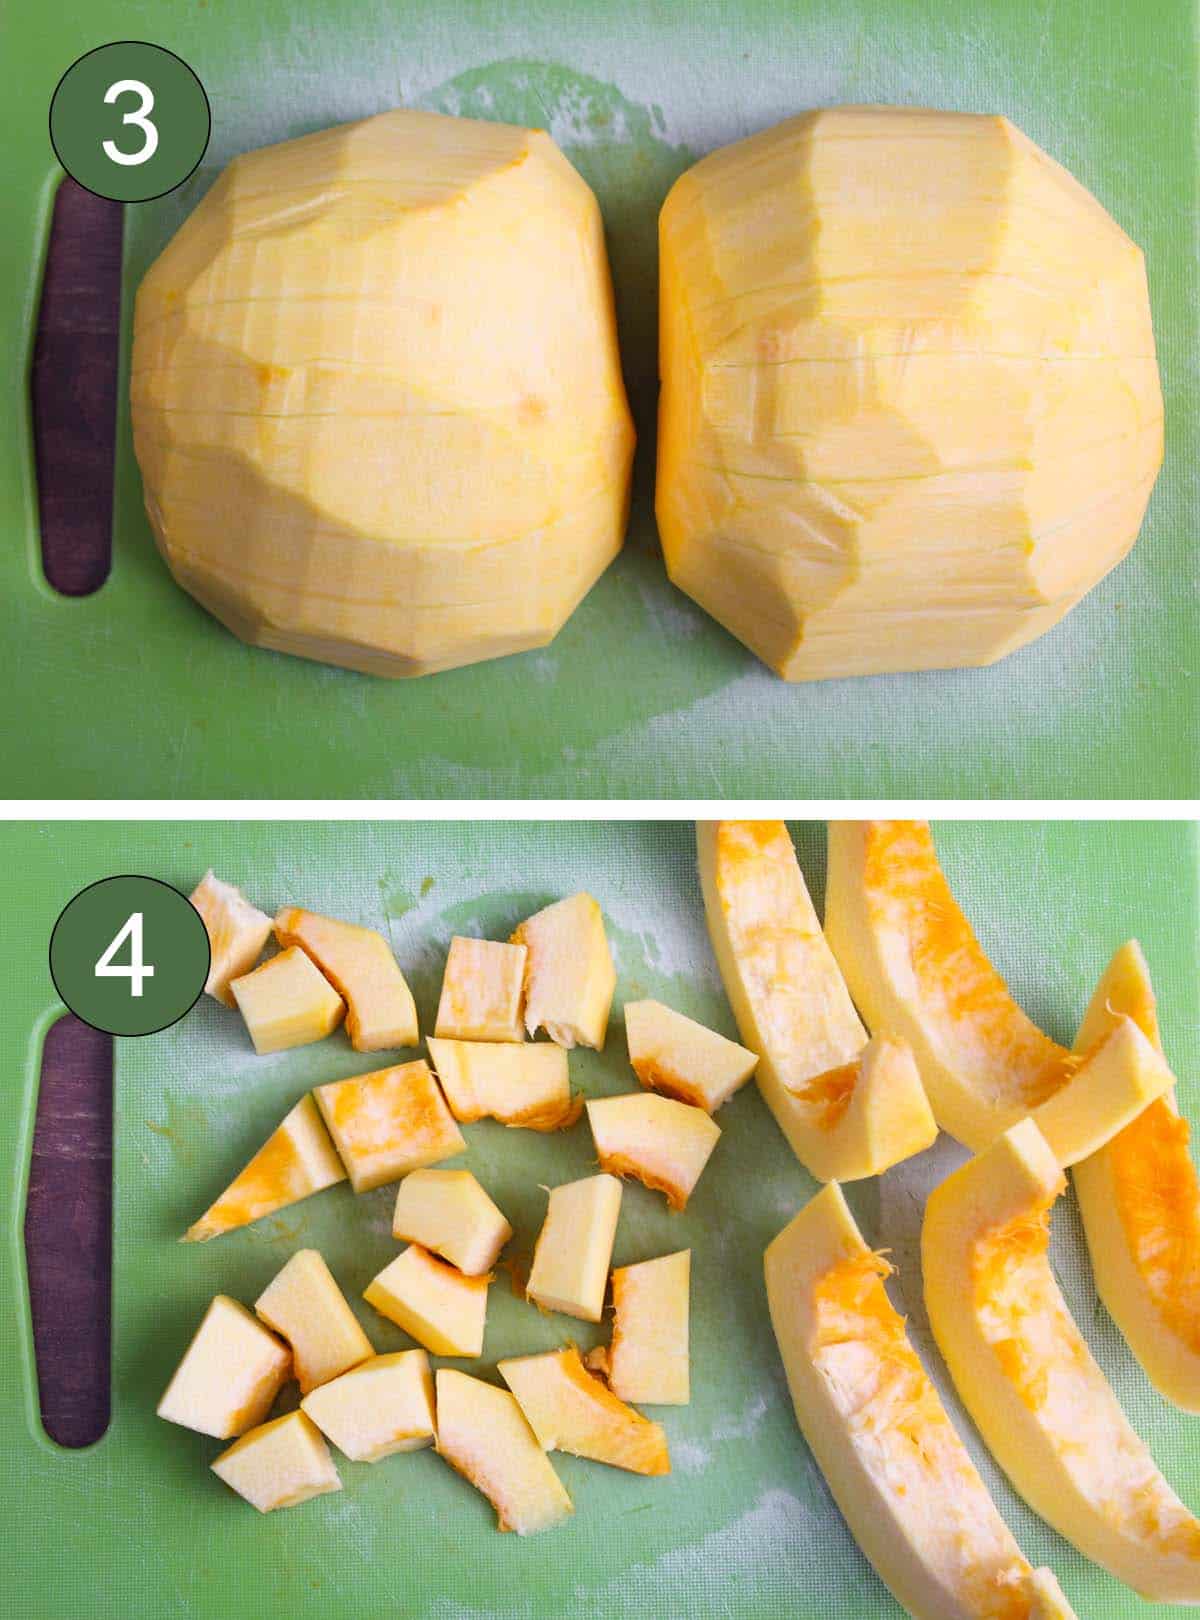 Process Shots Showing How to Chop the Pumpkin